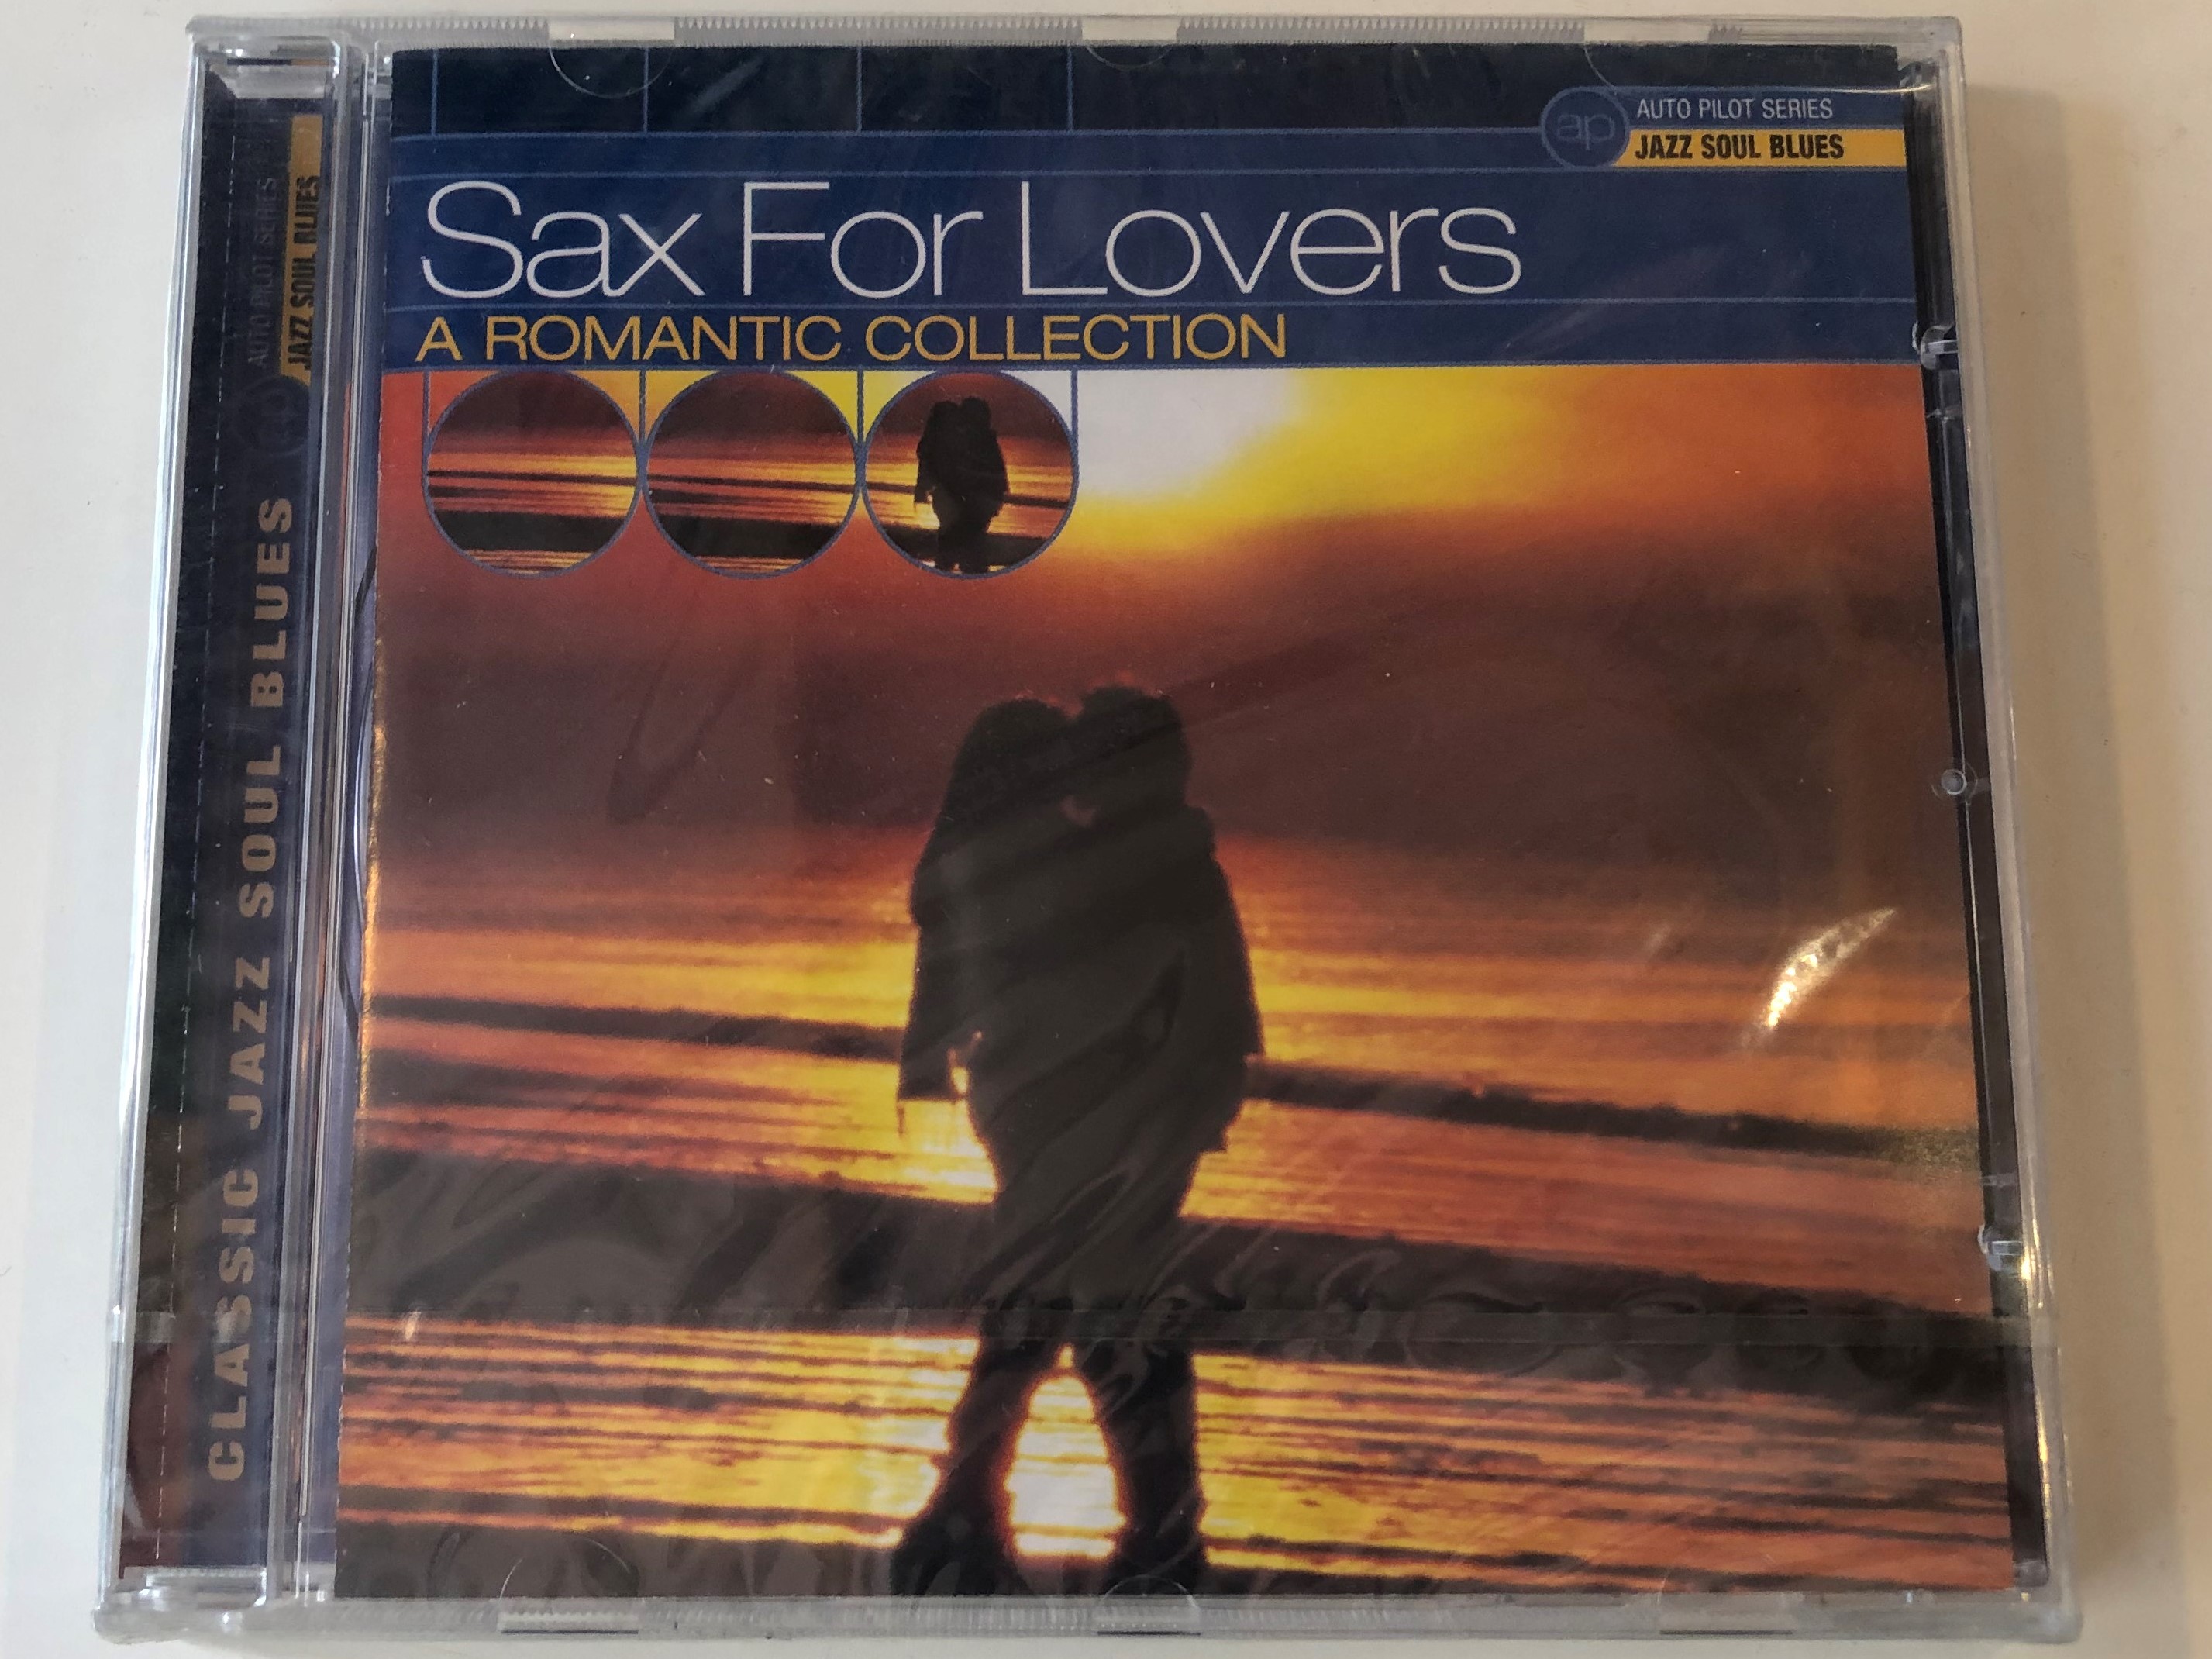 sax-for-lovers-a-romantic-collection-auto-pilot-series.-jazz-soul-blues-pnec-records-audio-cd-1999-5038894000528-1-.jpg